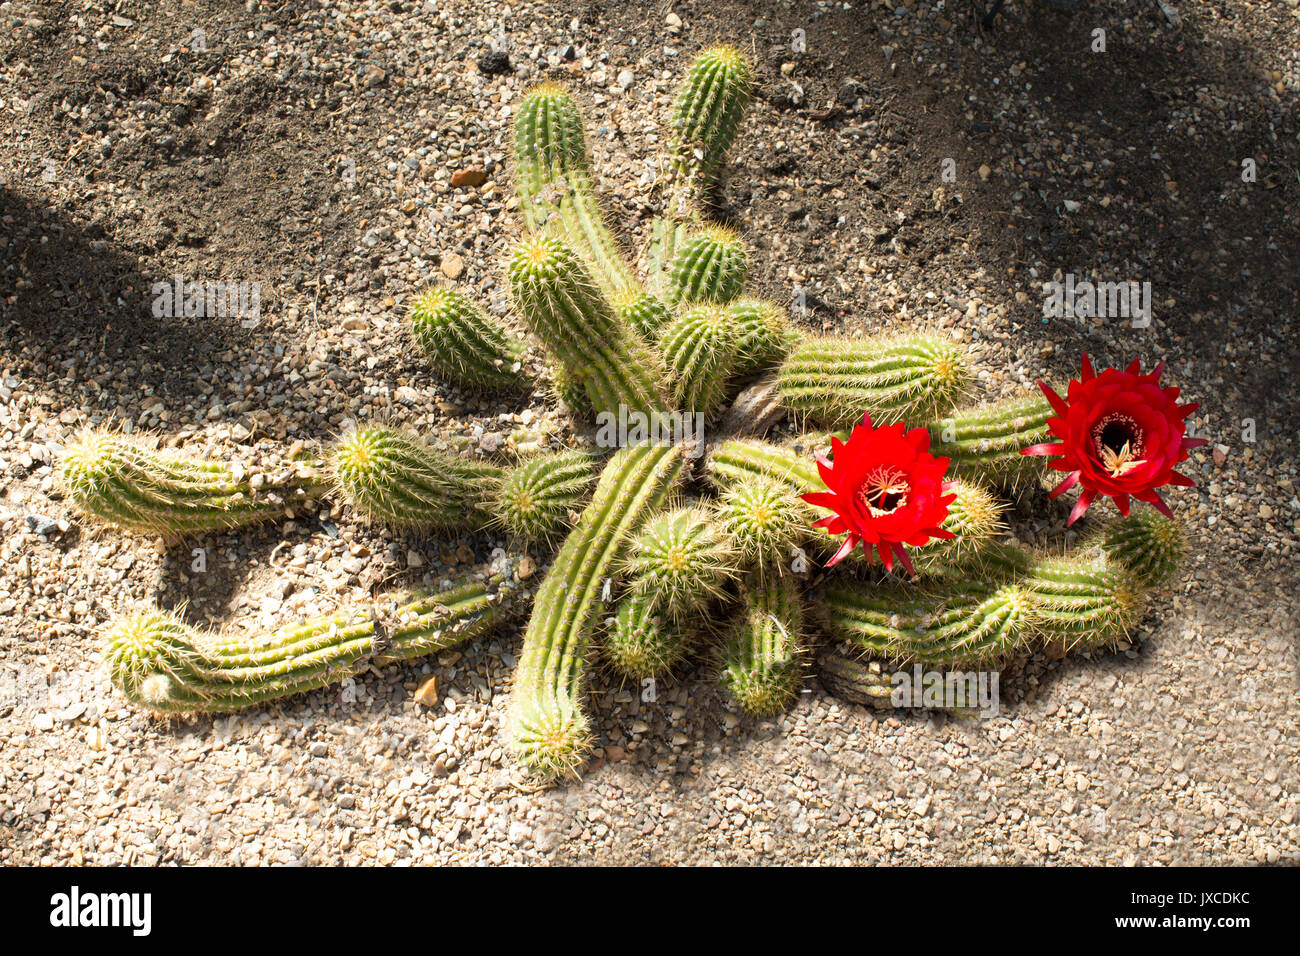 Cactus Echinopsis Huascha from Argentina Stock Photo